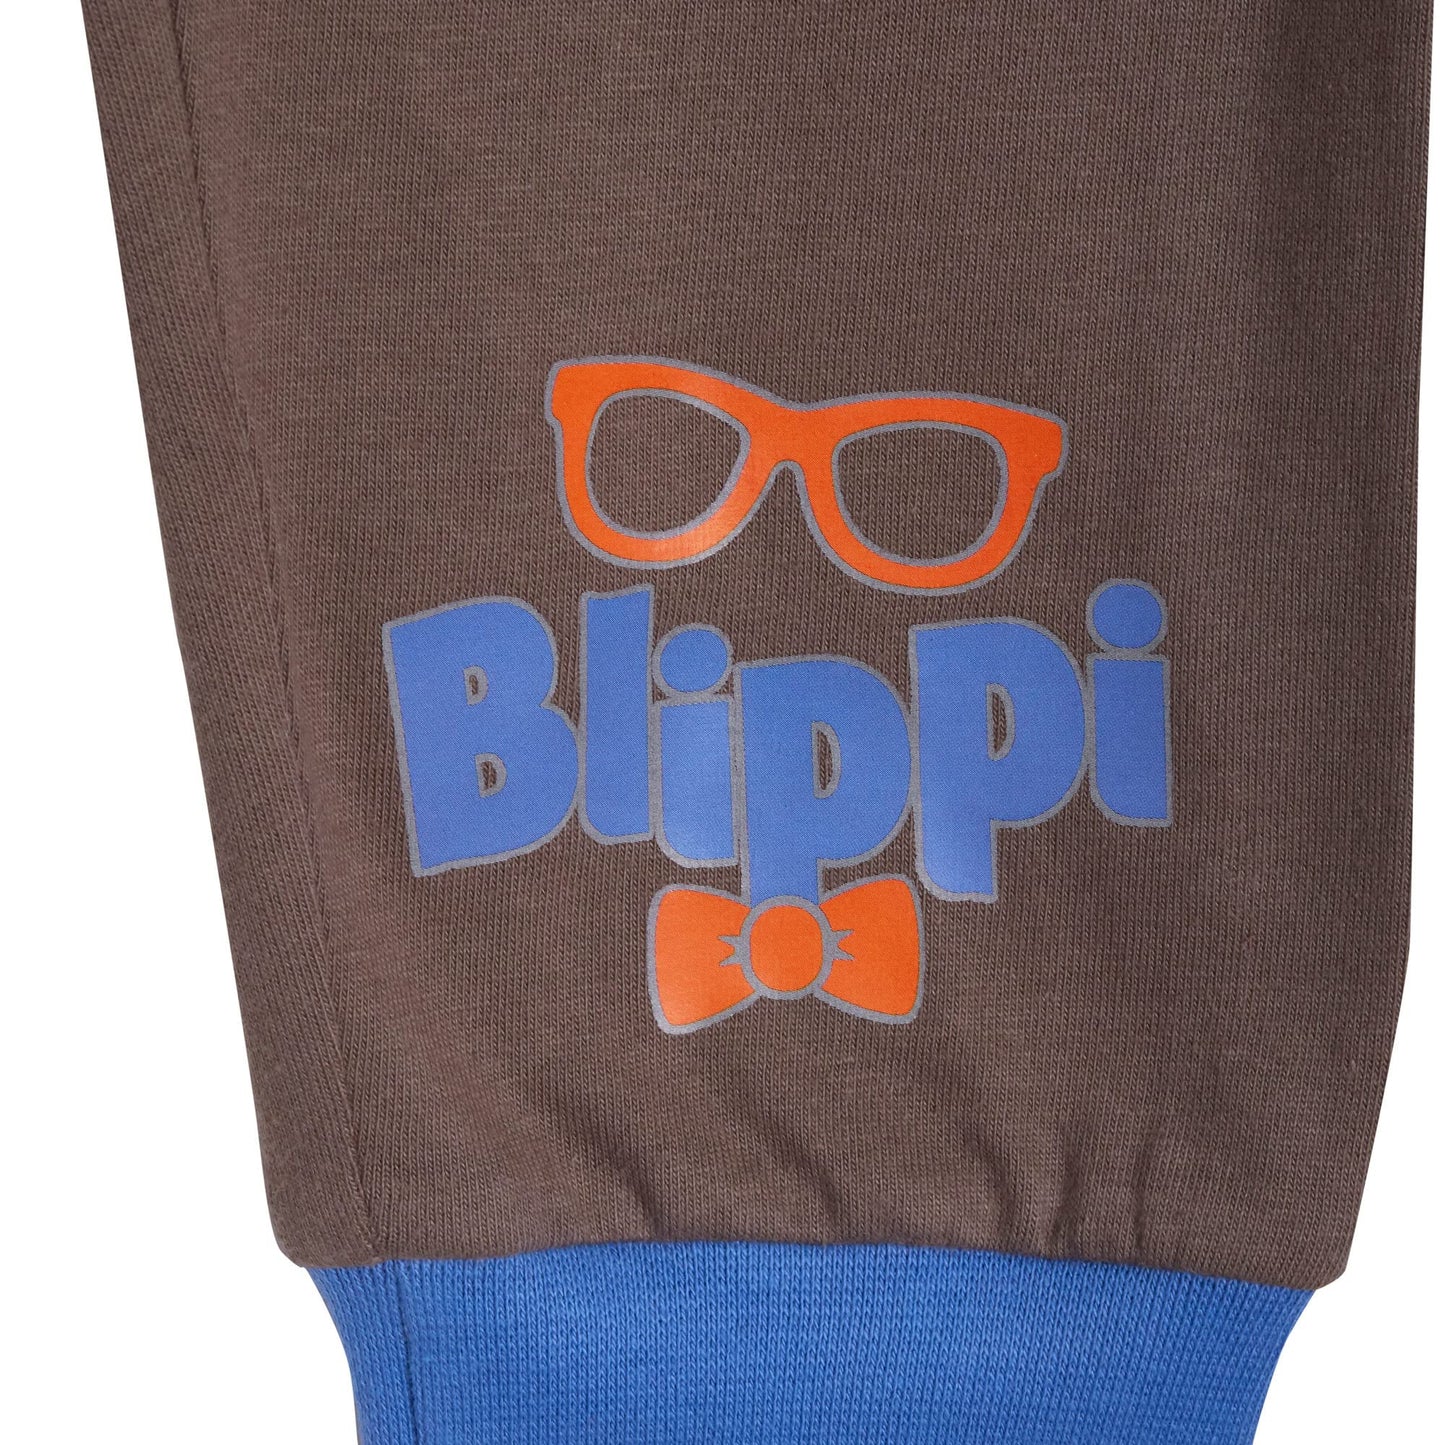 Blippi Boys Pyjamas Kids Dress Up Pjs Novelty Full Length Pyjama Set 1-2 Years